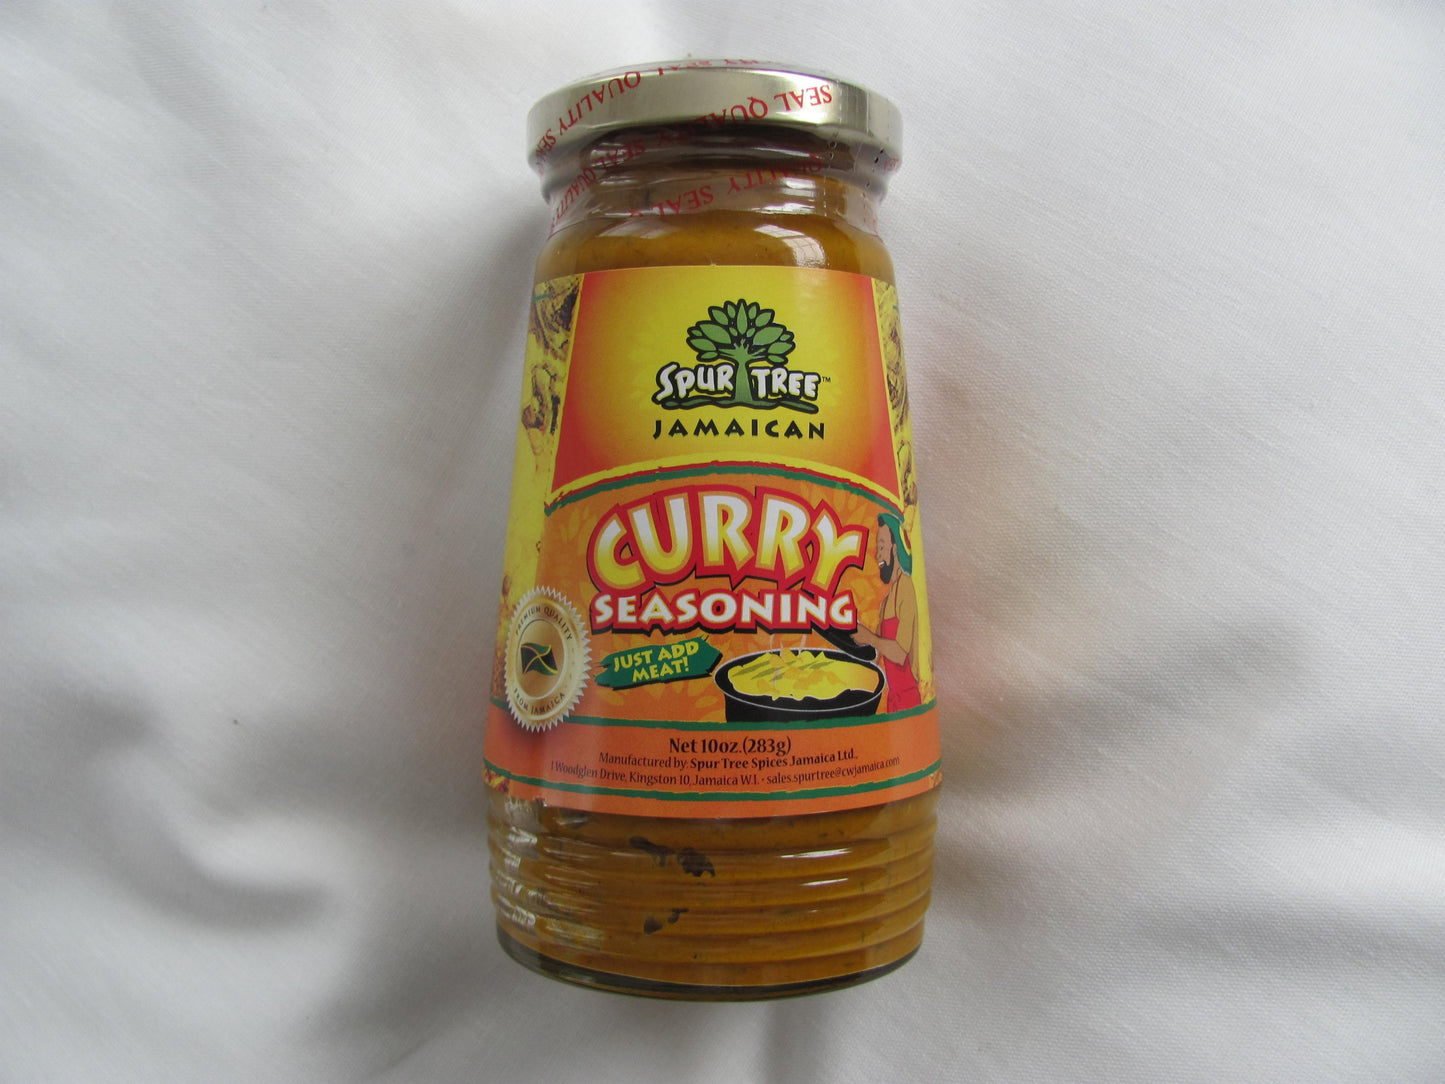 Spur Tree Jamaican Curry Seasoning 283g